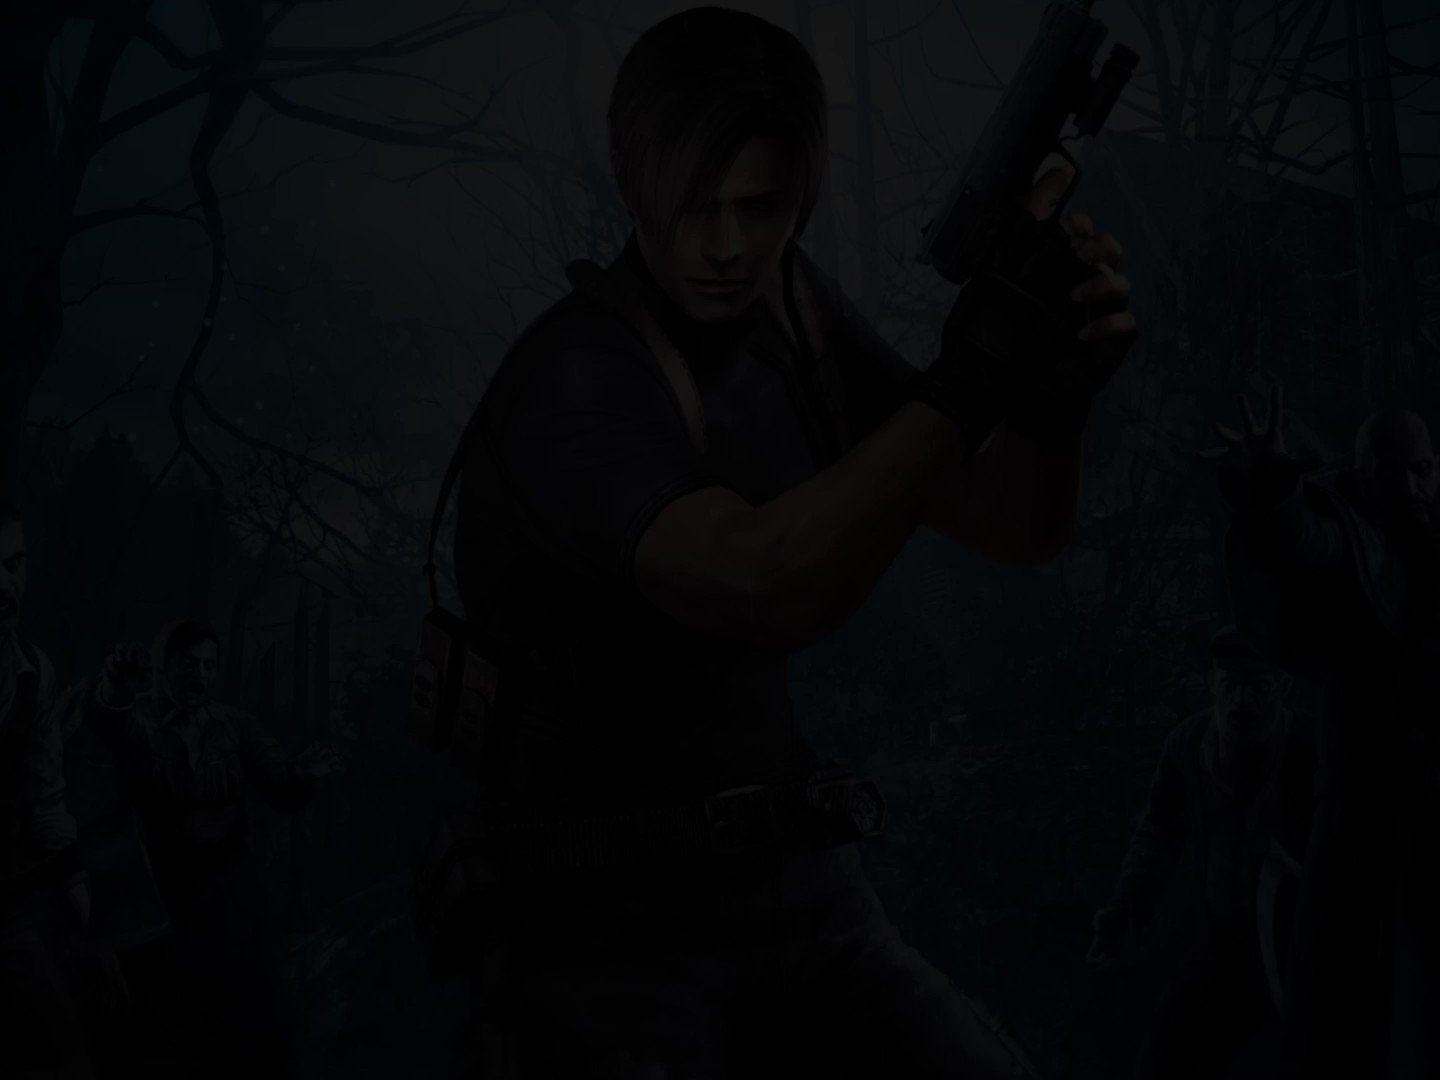 New Resident Evil 4 Remake Wallpapers edited by Me. follow me on my social  media art accounts for more. Instagram : @aymendesignerr ; Twitter :  @Aymenboukhalefa : r/residentevil